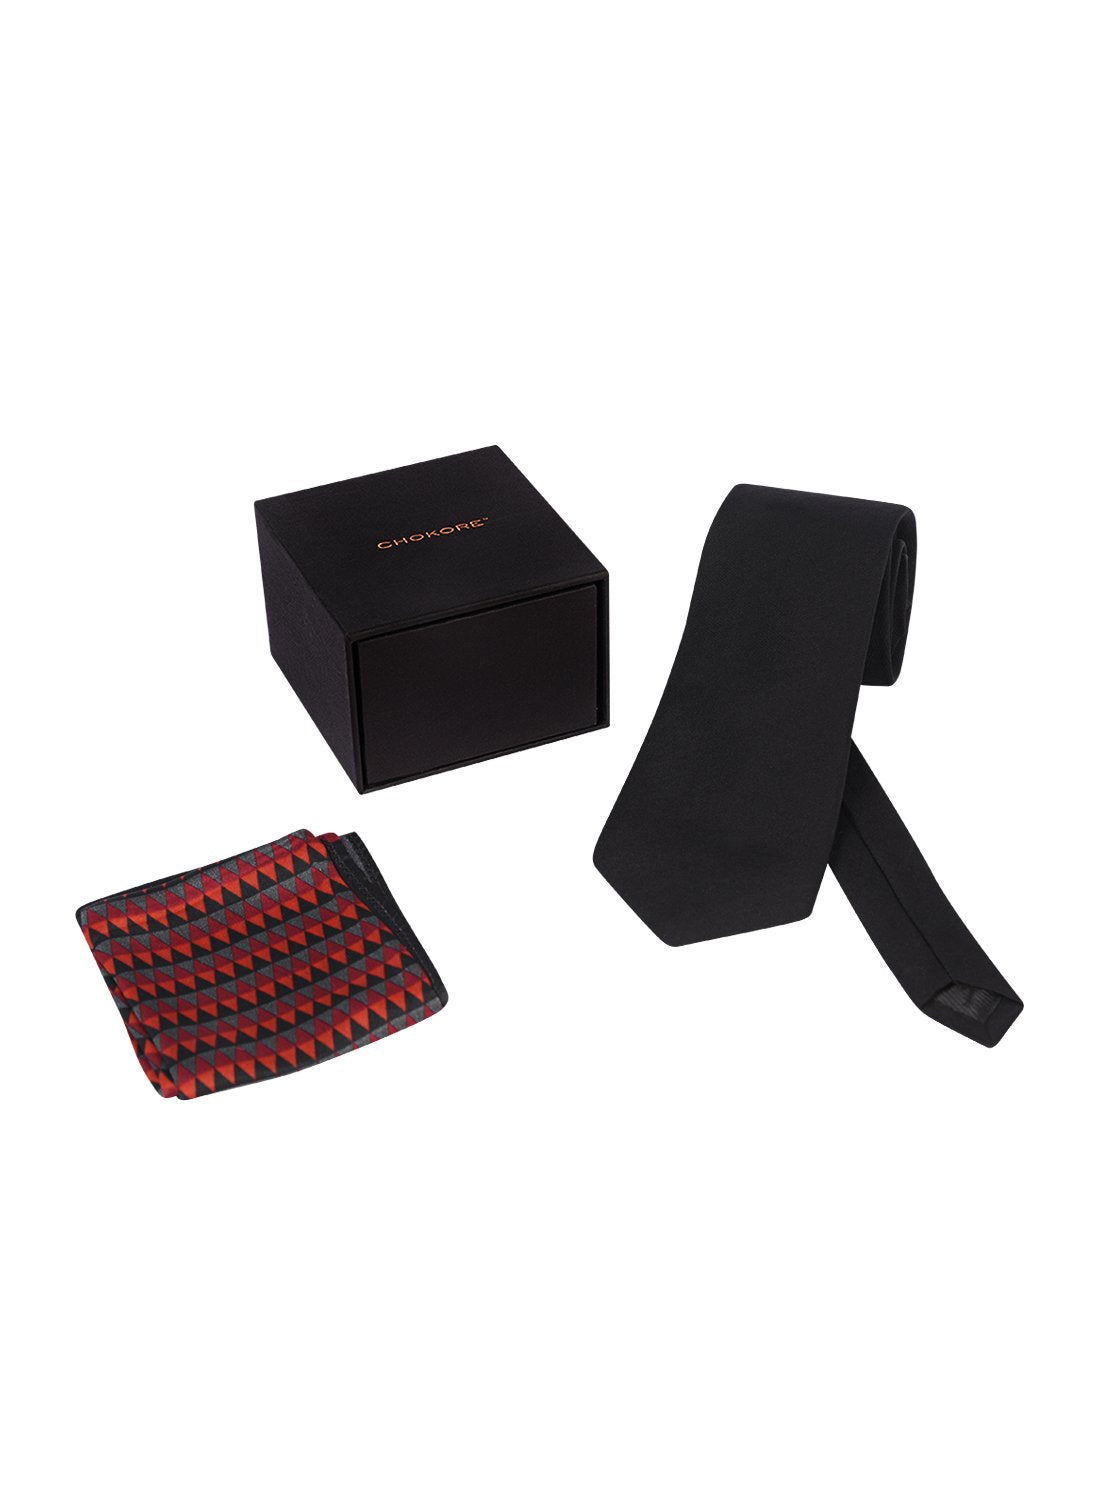 Chokore Black color silk tie & Red and Black Silk Pocket Square set